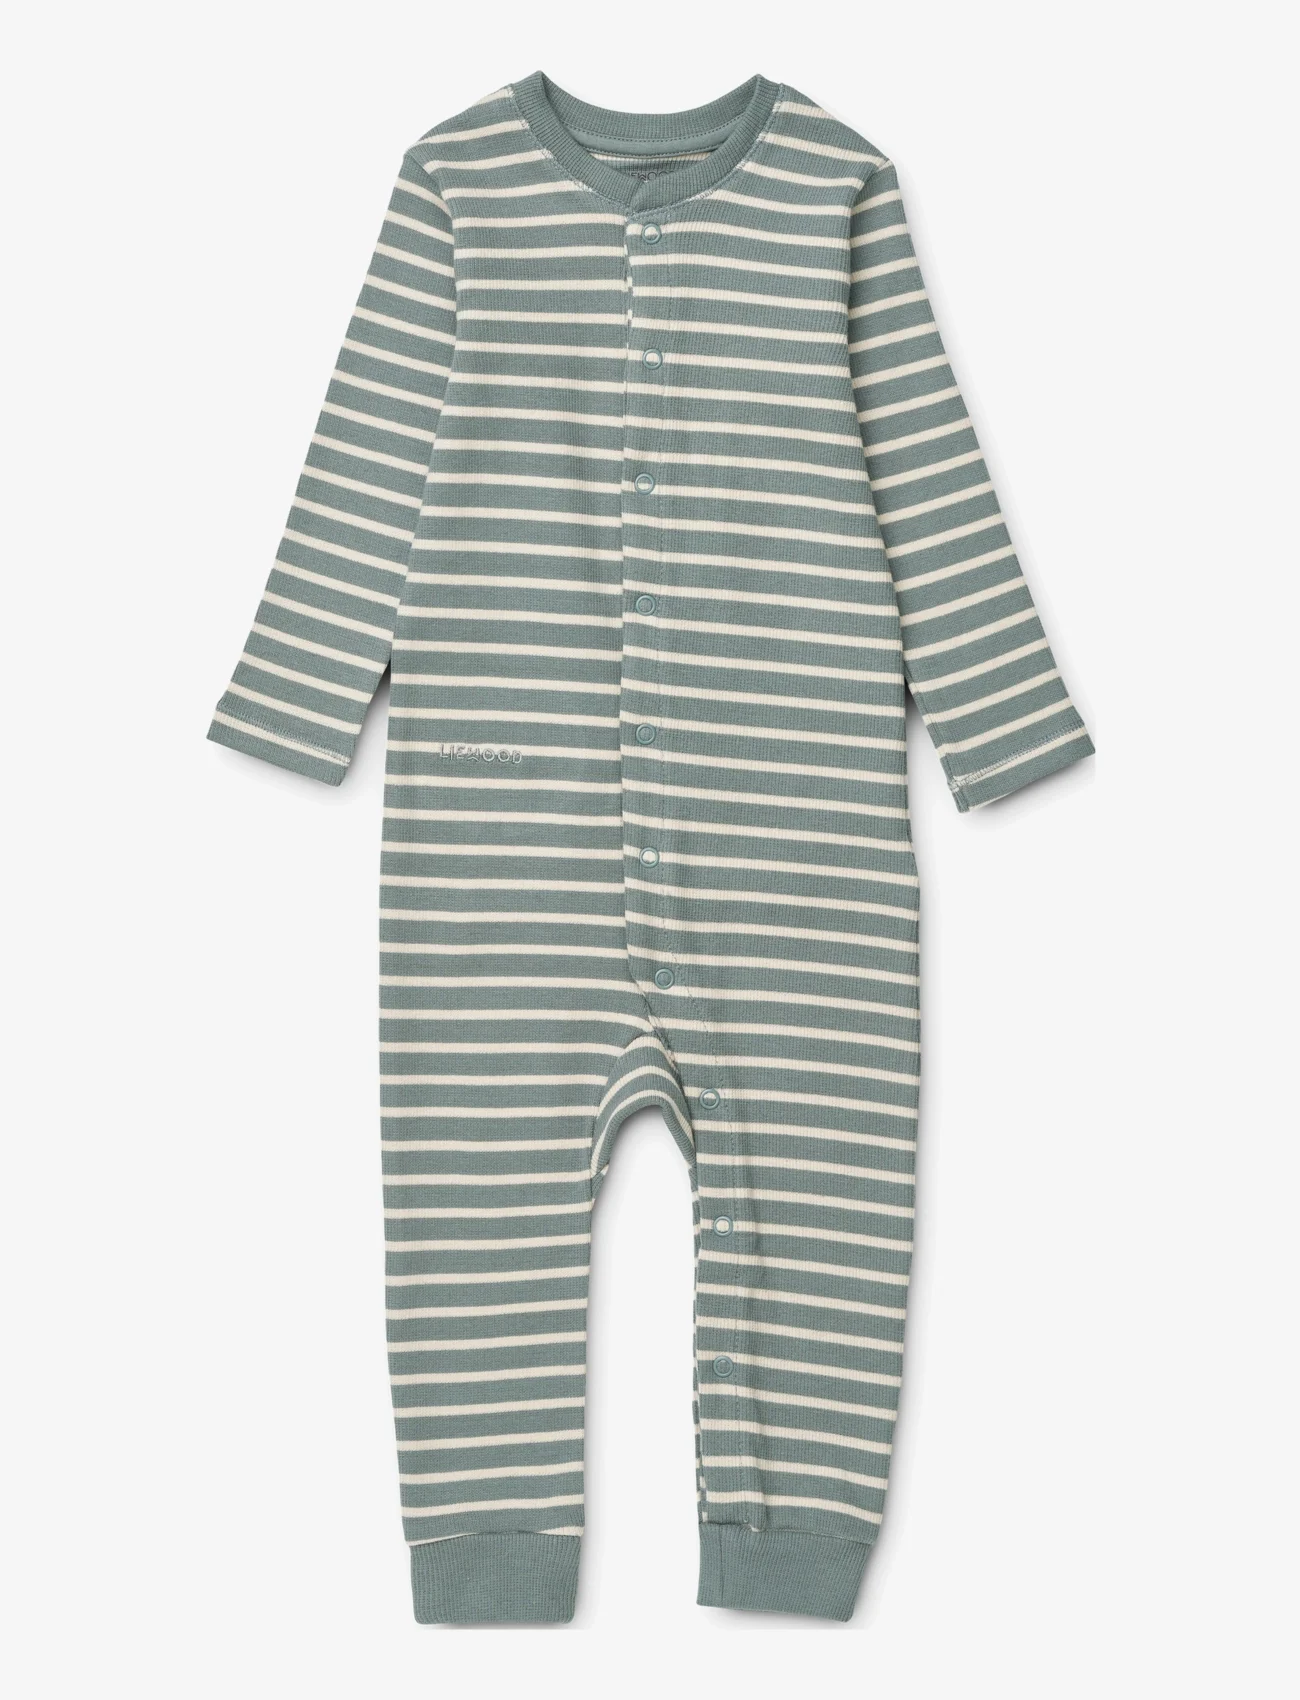 Liewood - Birk pyjamas jumpsuit - schlafoveralls - y/d stripe - 0